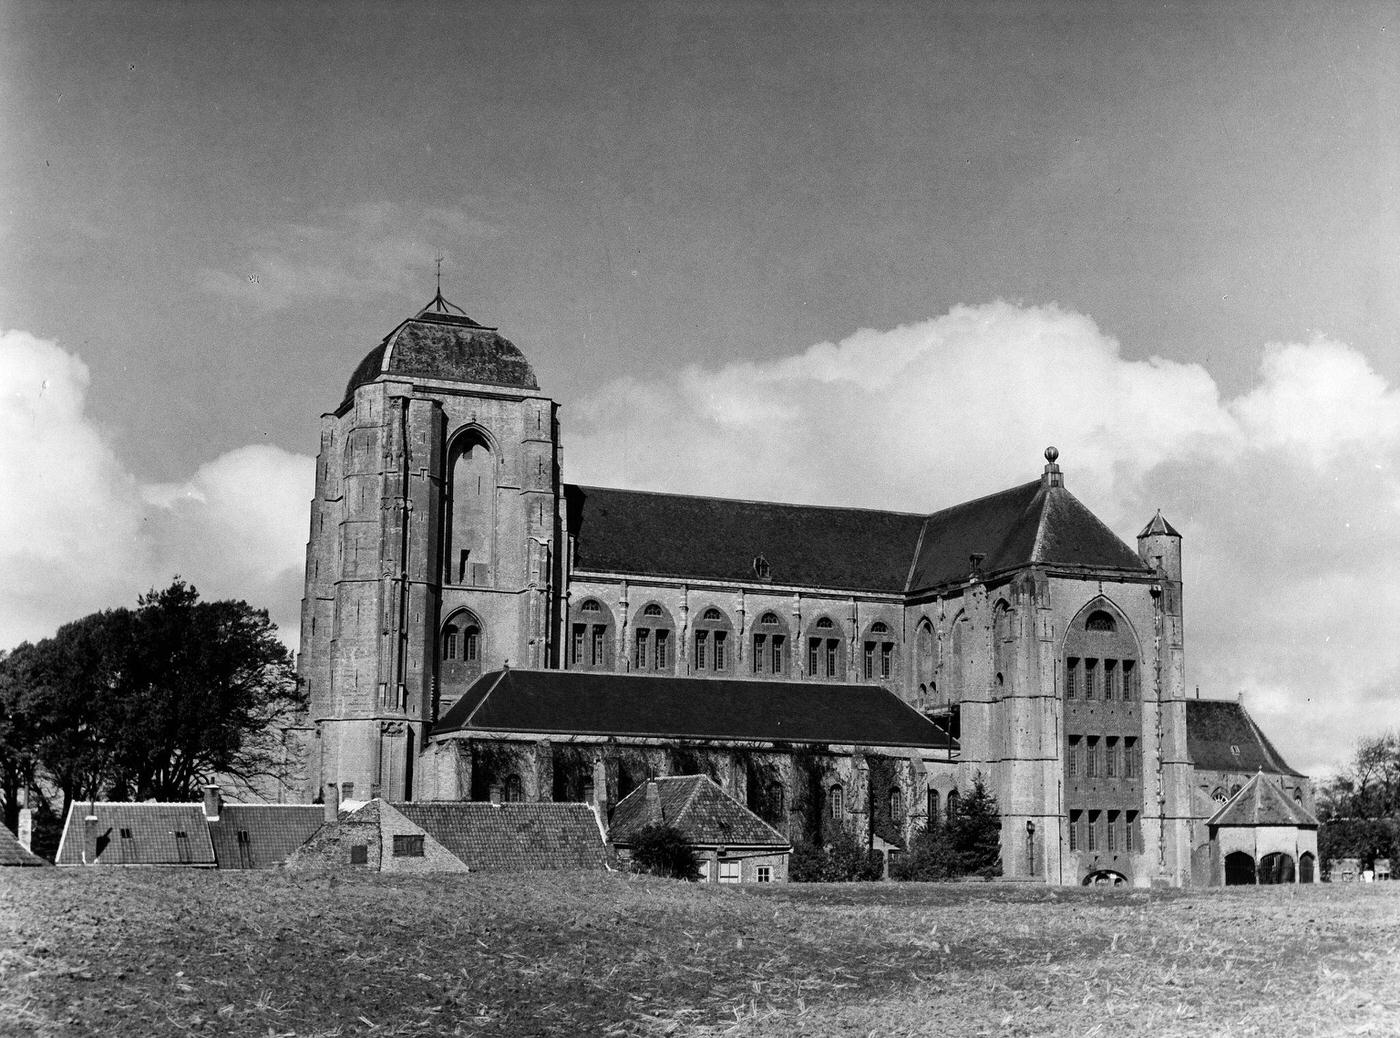 Views of Onze-Lieve-Vrouwekerk church in Veere, Netherlands, vintage property of ullstein bild.